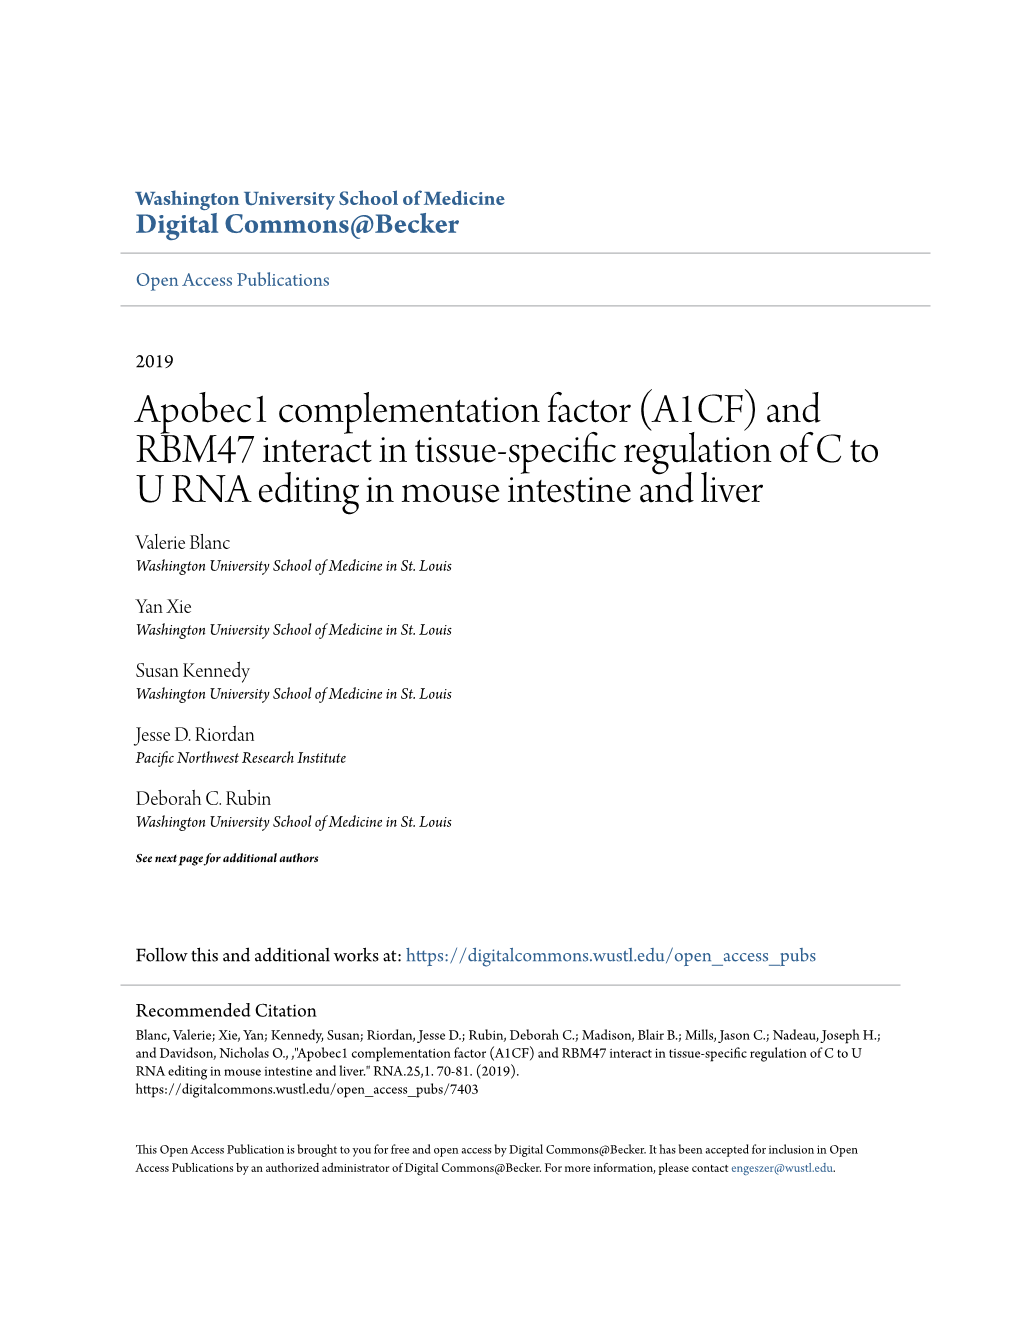 Apobec1 Complementation Factor (A1CF)